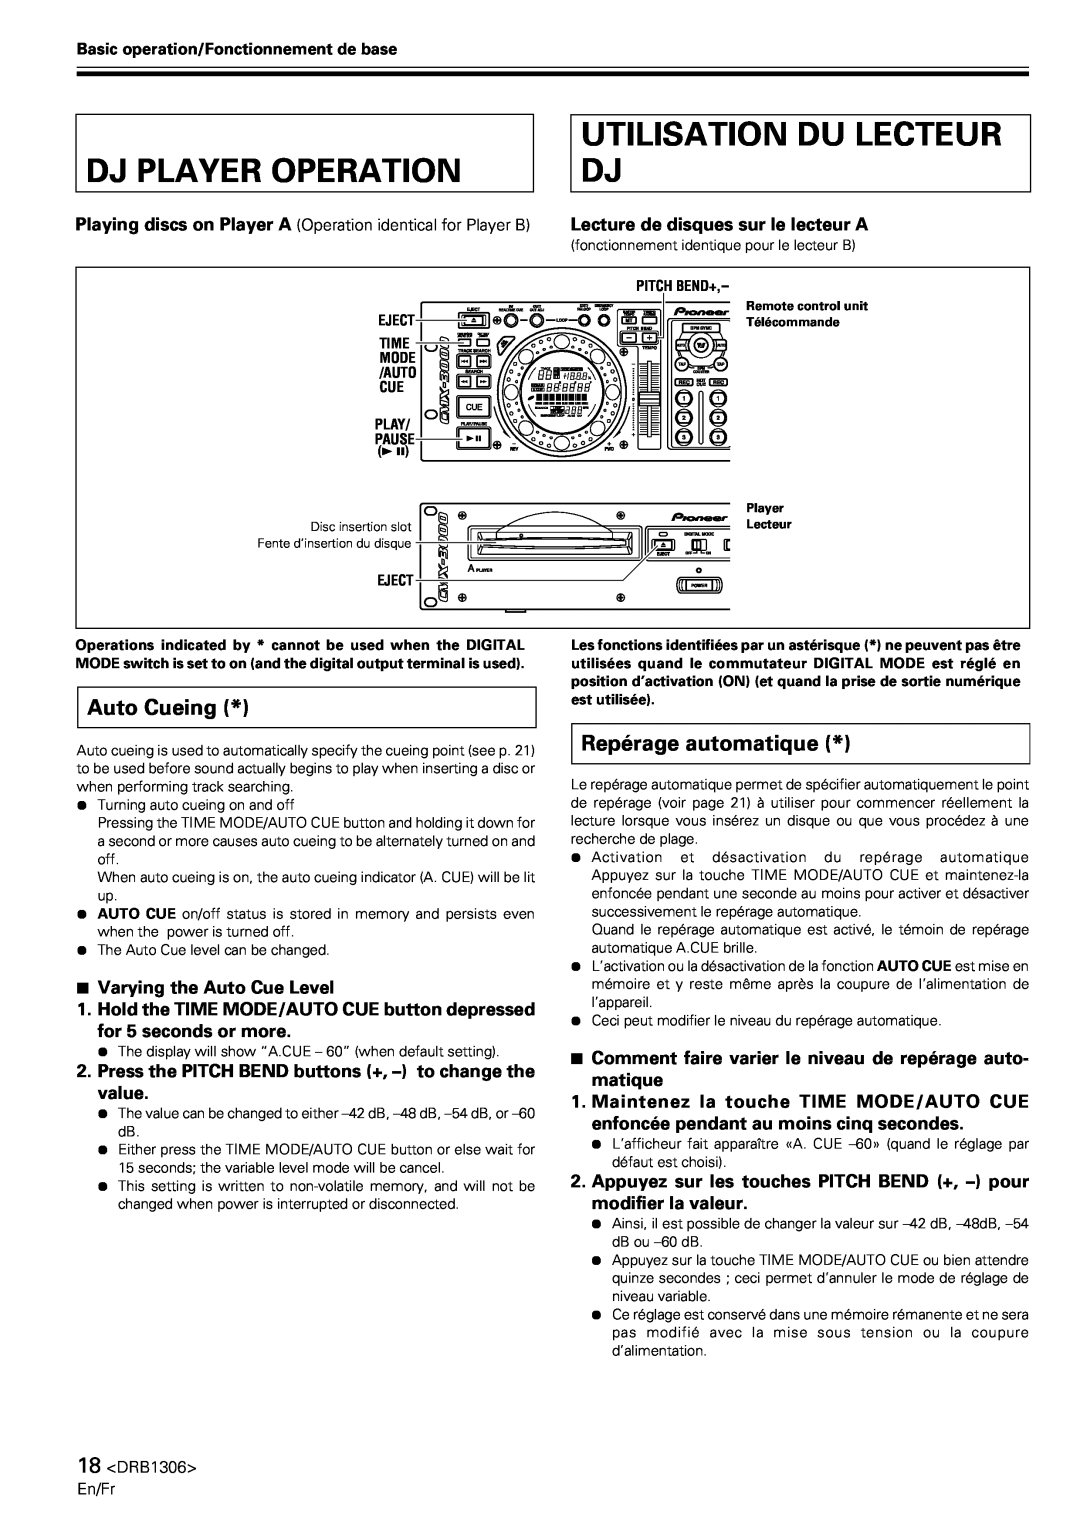 Pioneer CMX-3000 operating instructions Dj Player Operation, Utilisation Du Lecteur Dj, Auto Cueing, Repérage automatique 